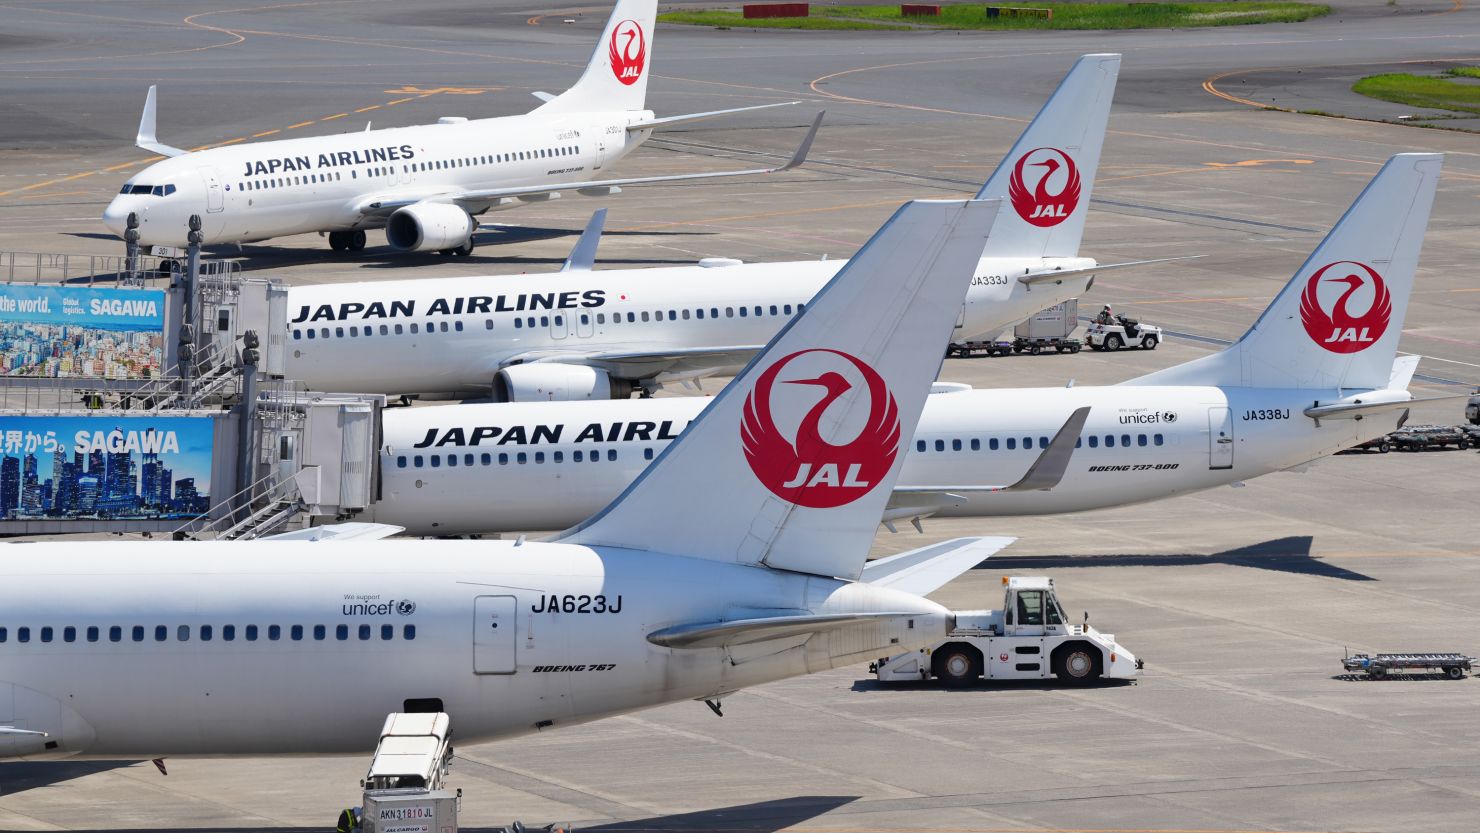 Japan Airlines planes sit on the tarmac at Haneda Airport in Tokyo, Japan. 